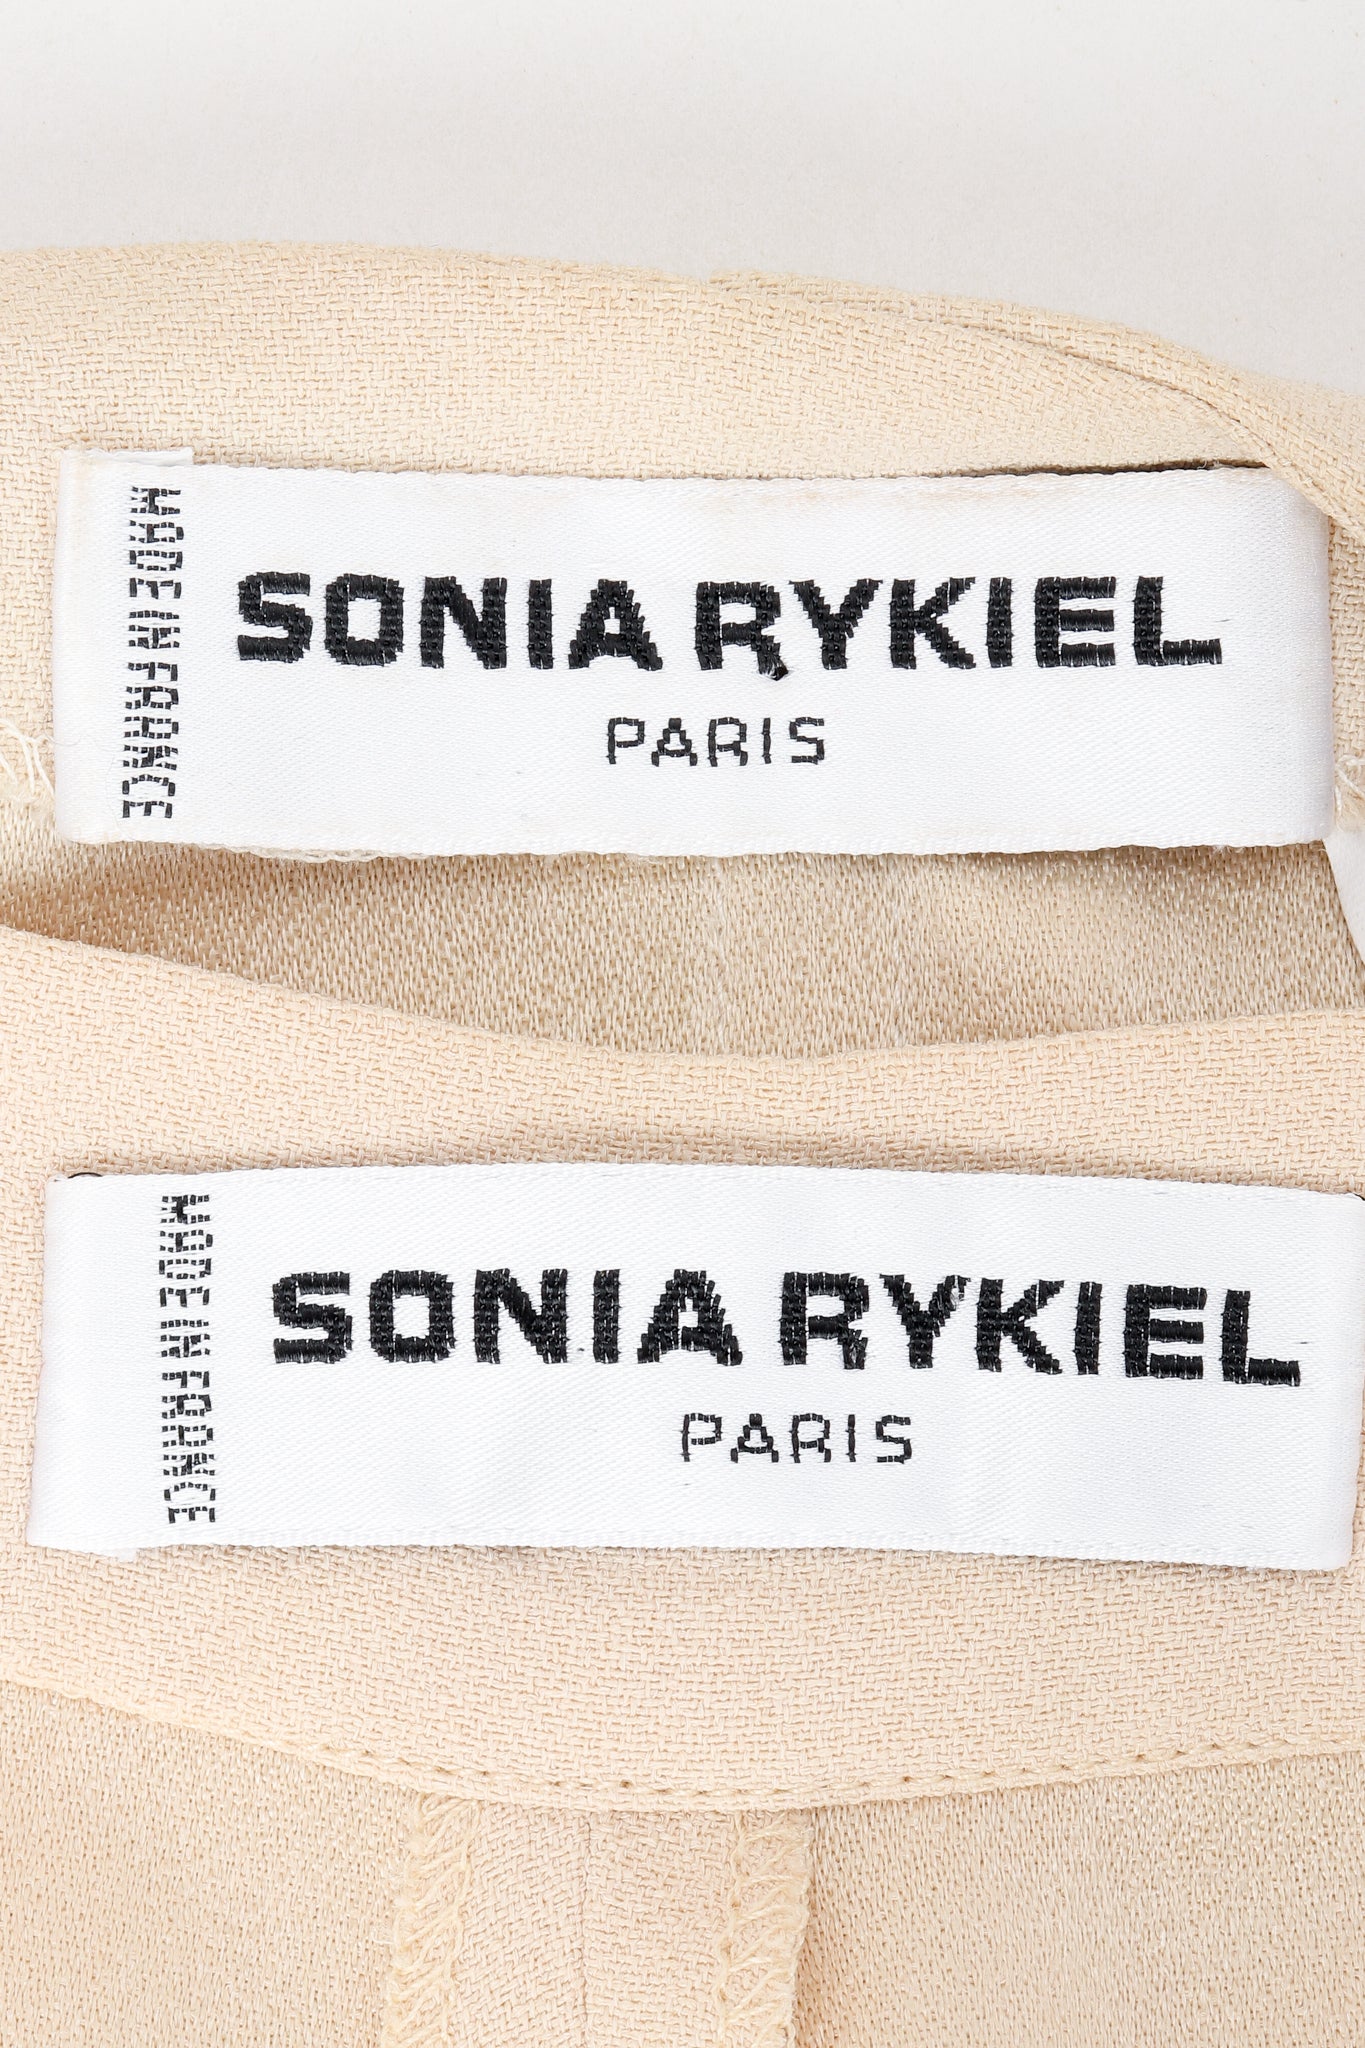 Vintage Sonia Rykiel labels on beige fabric